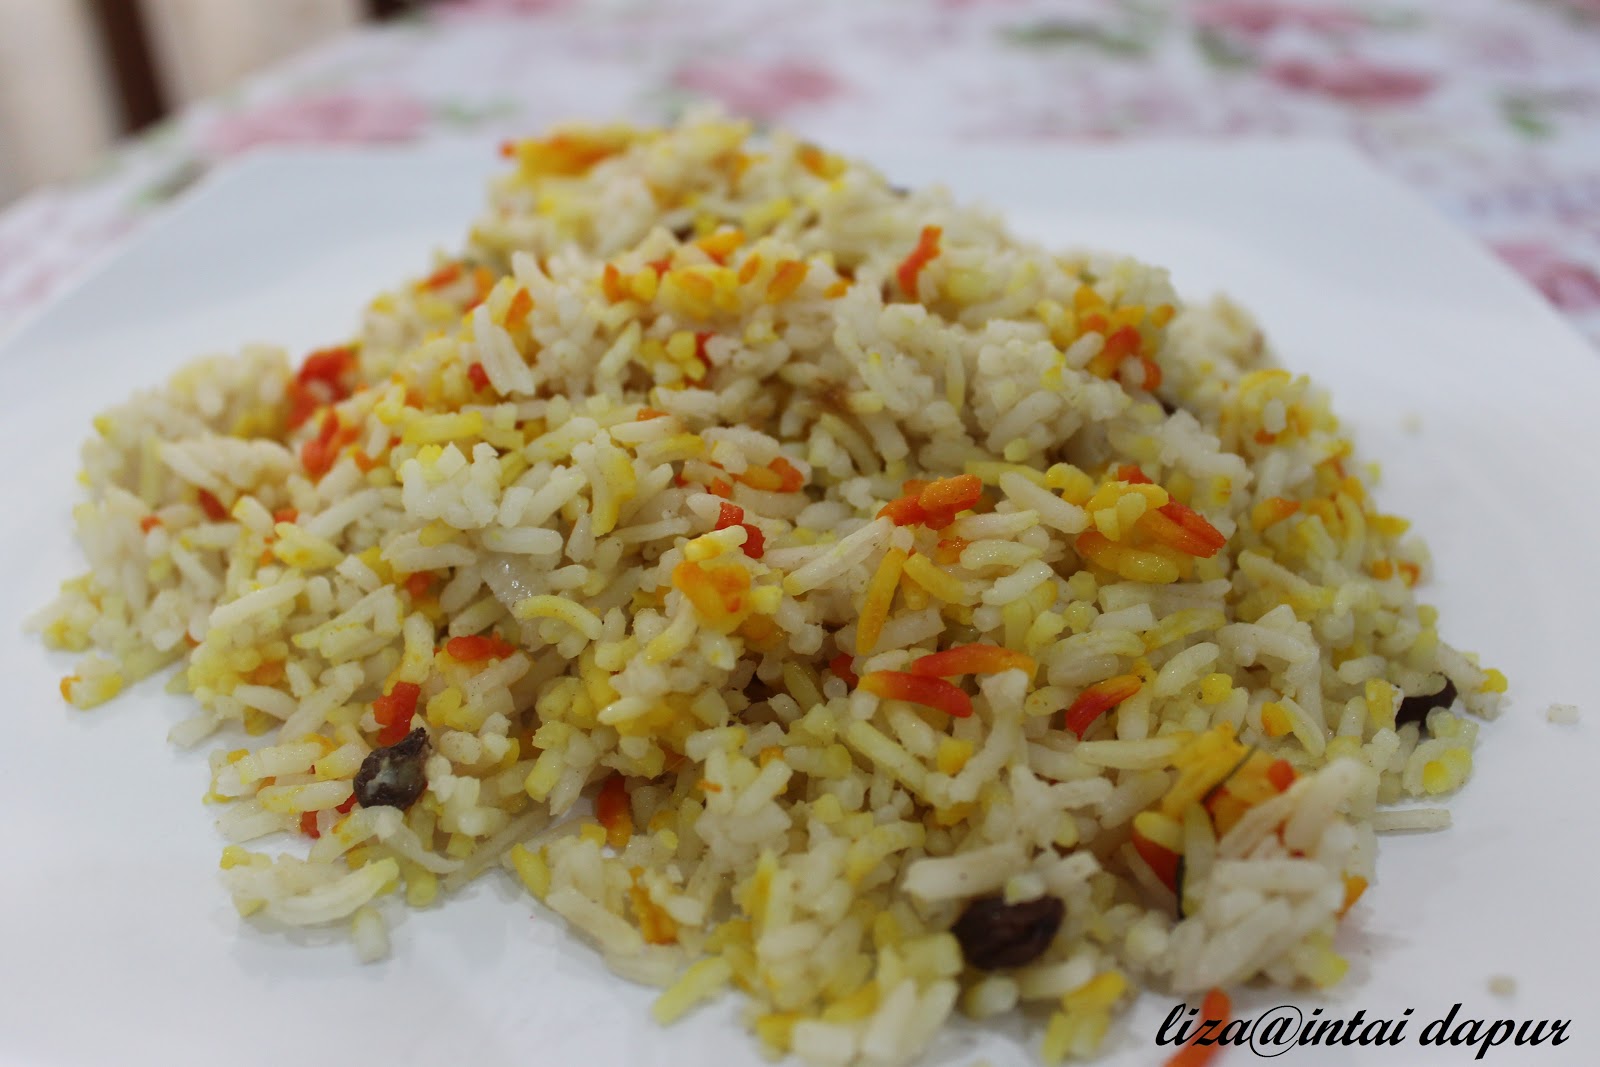 INTAI DAPUR: Nasi Beriani Simple.